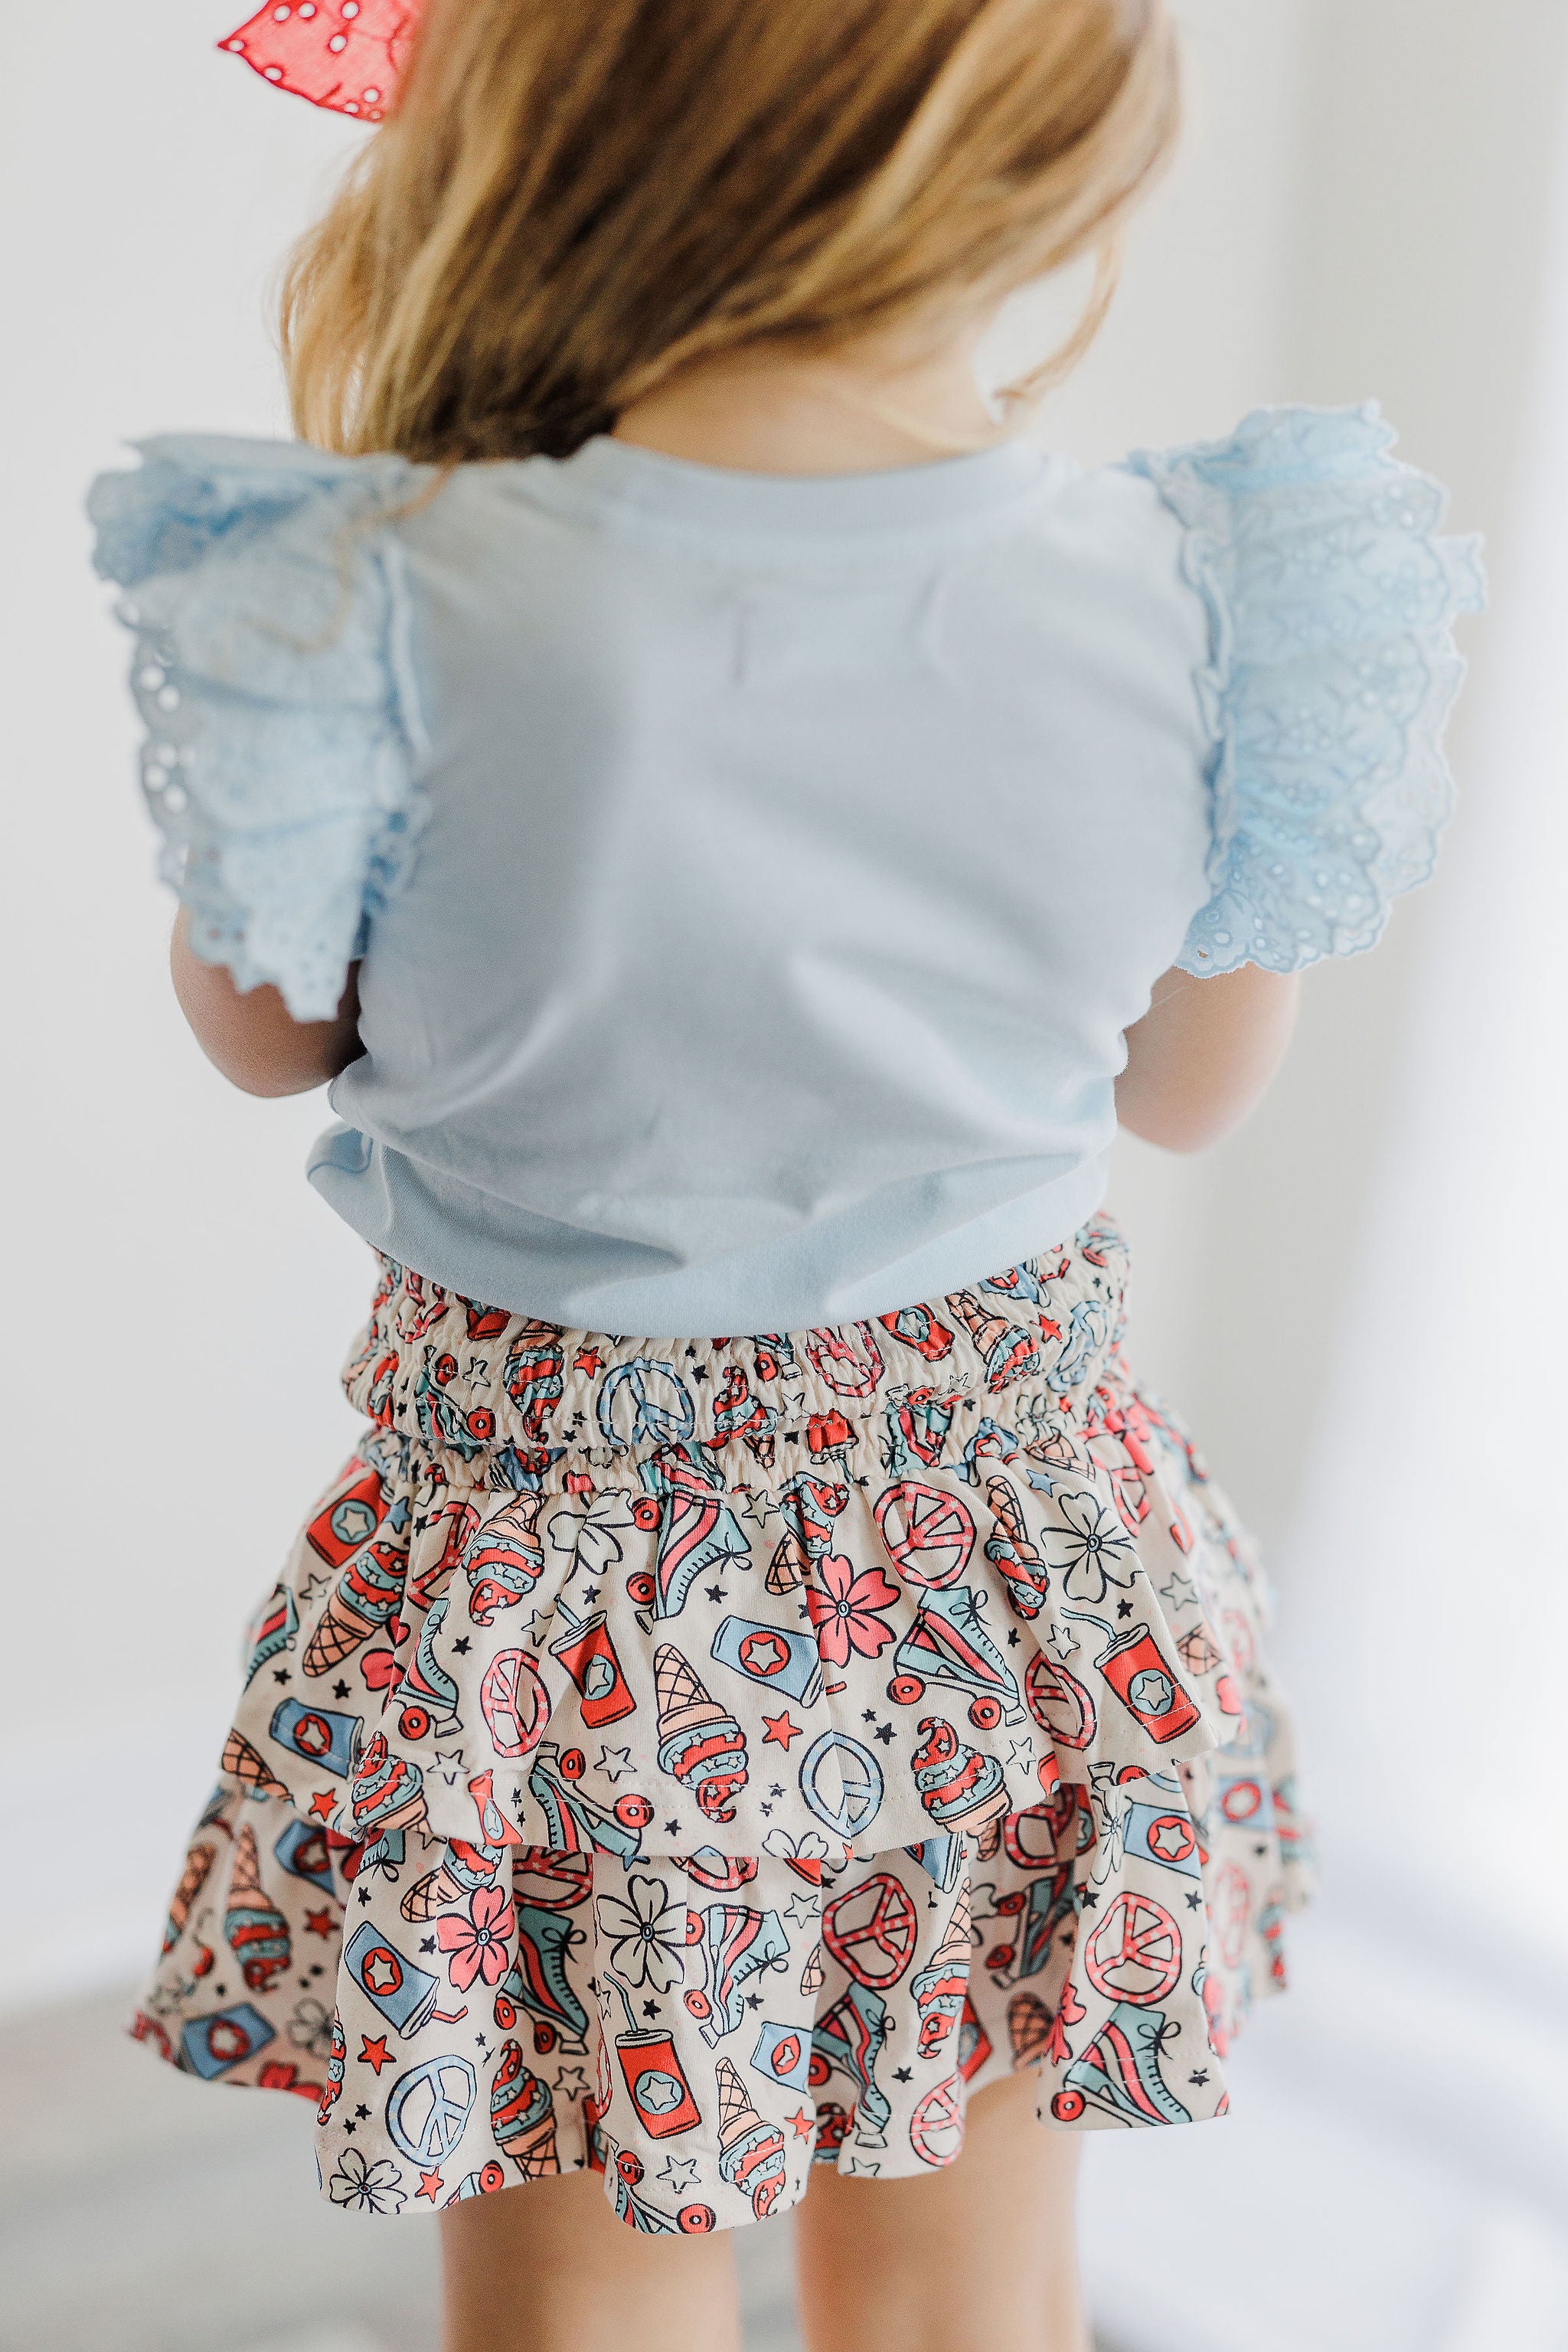 Blair Layer Skirt - American Girl